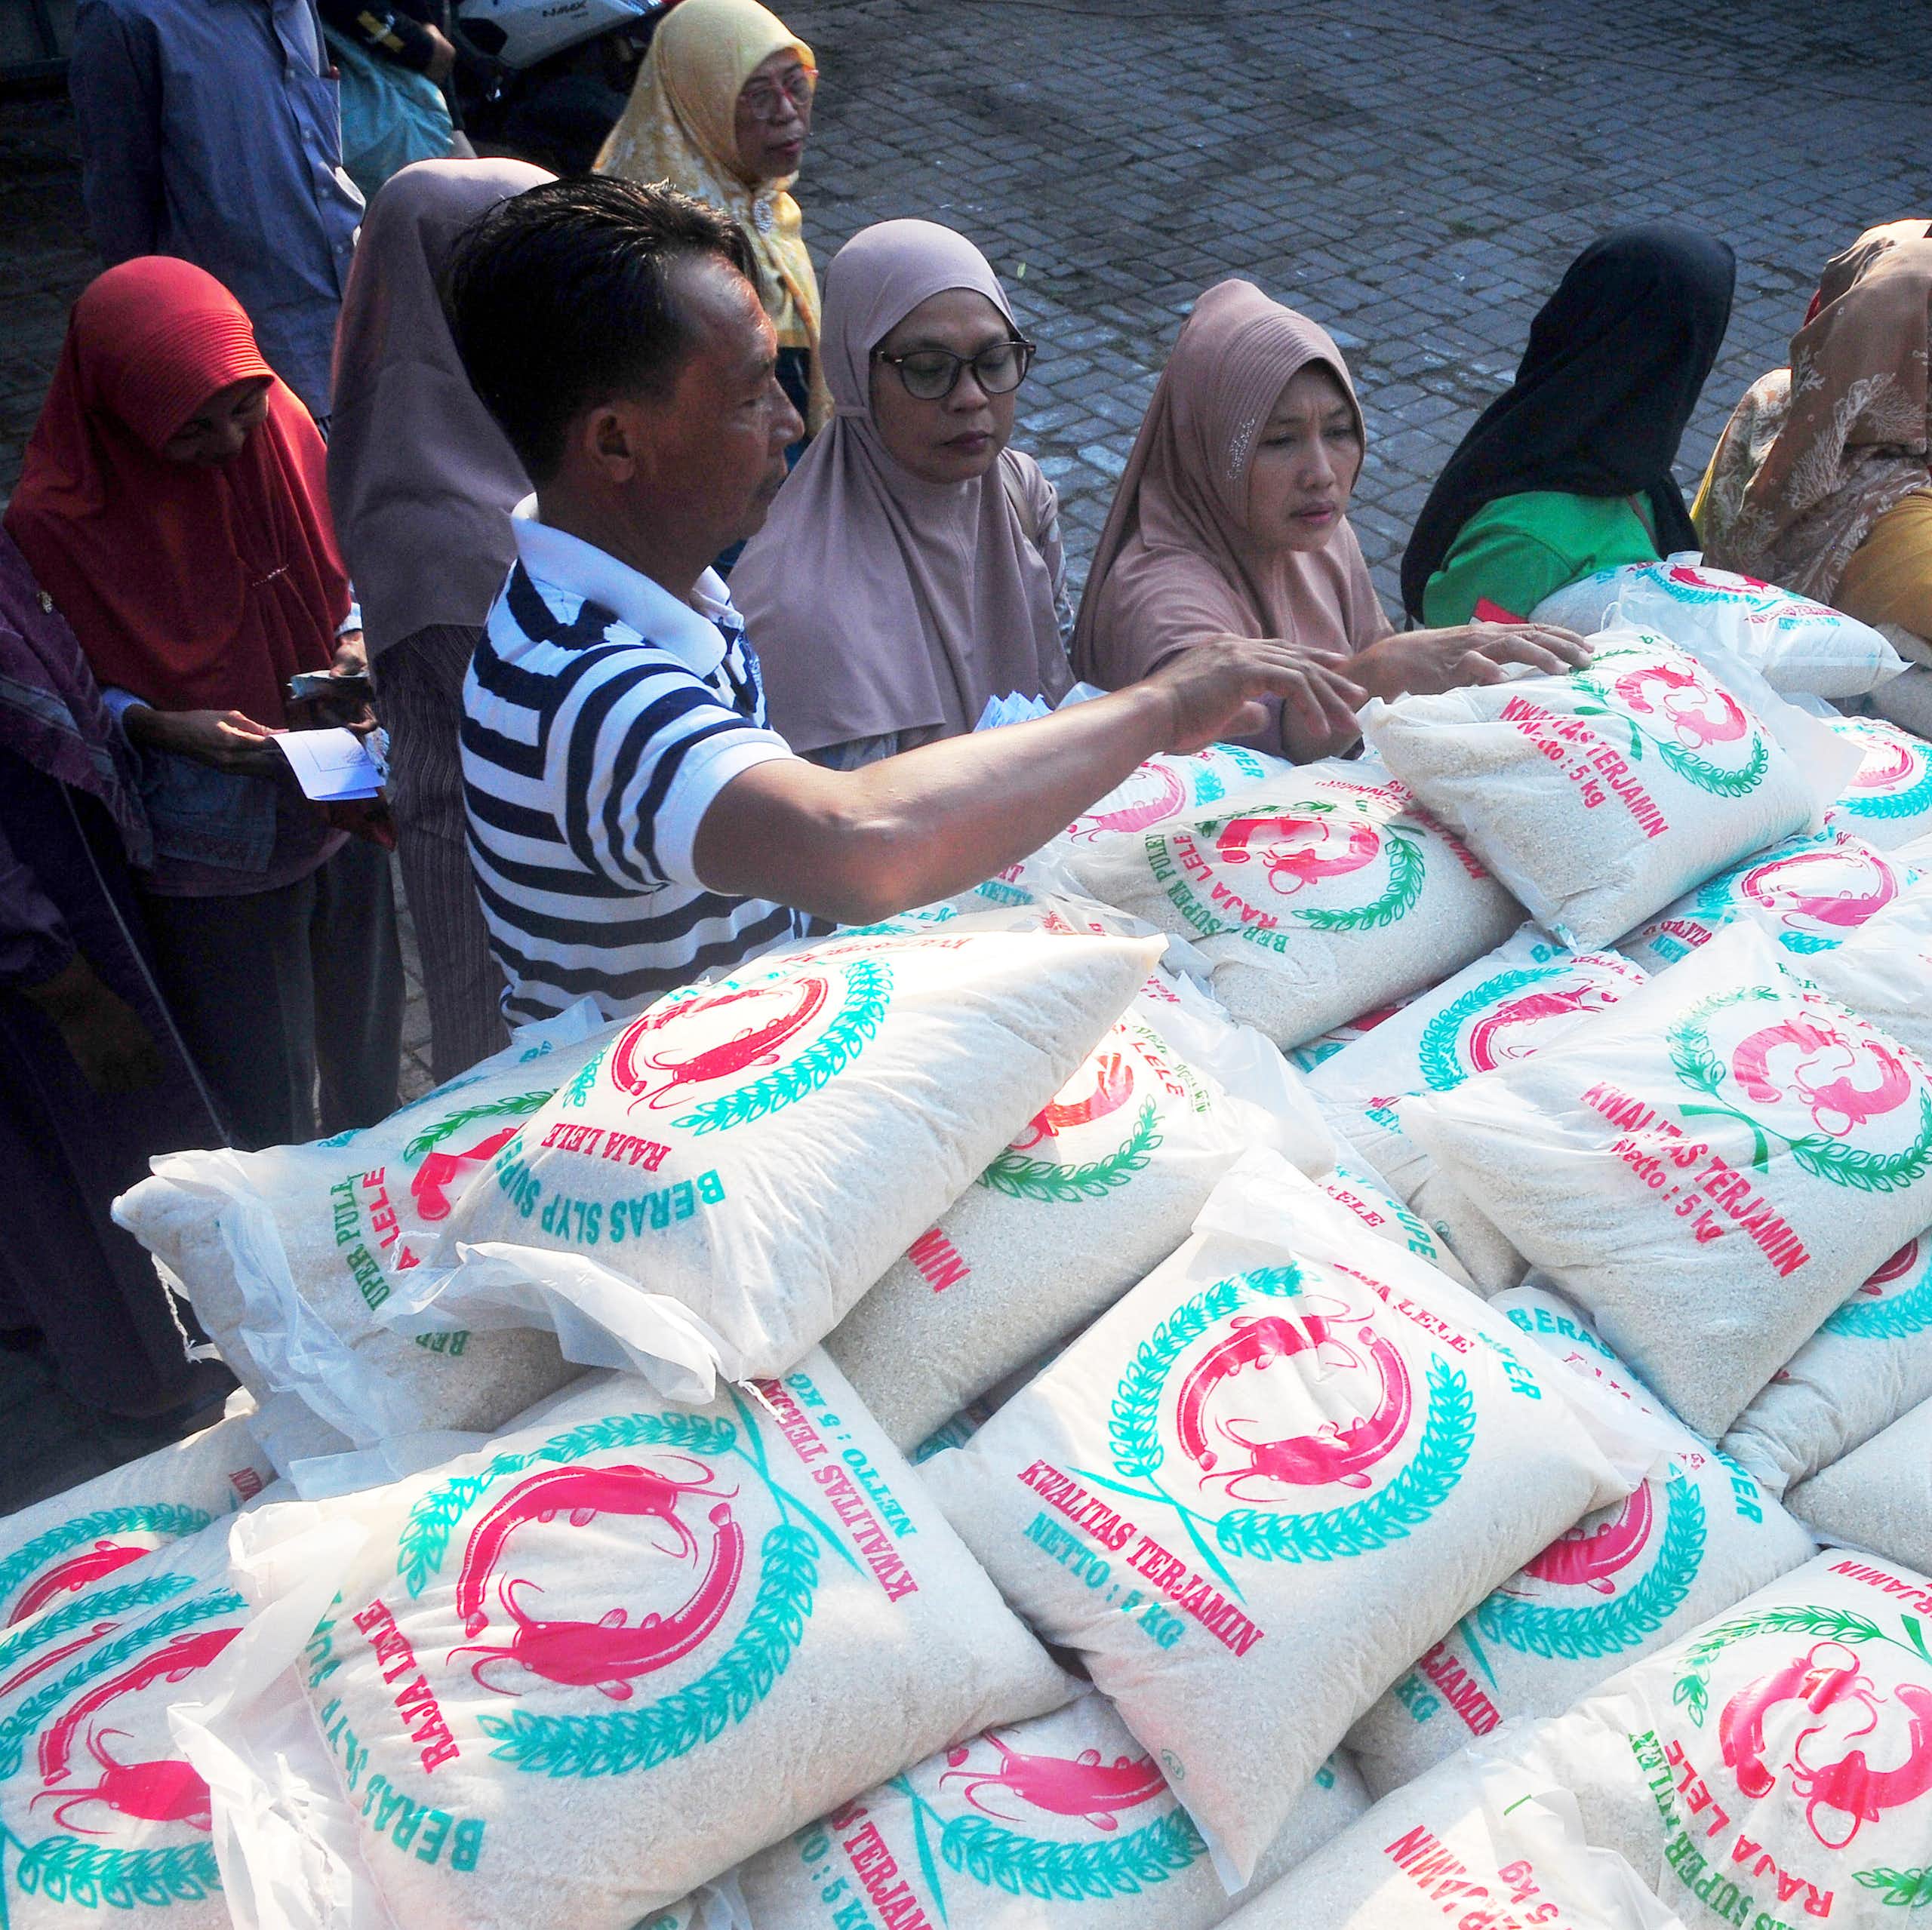 Cek Fakta: benarkah kenaikan harga beras di Indonesia lebih rendah dari negara-negara lain?